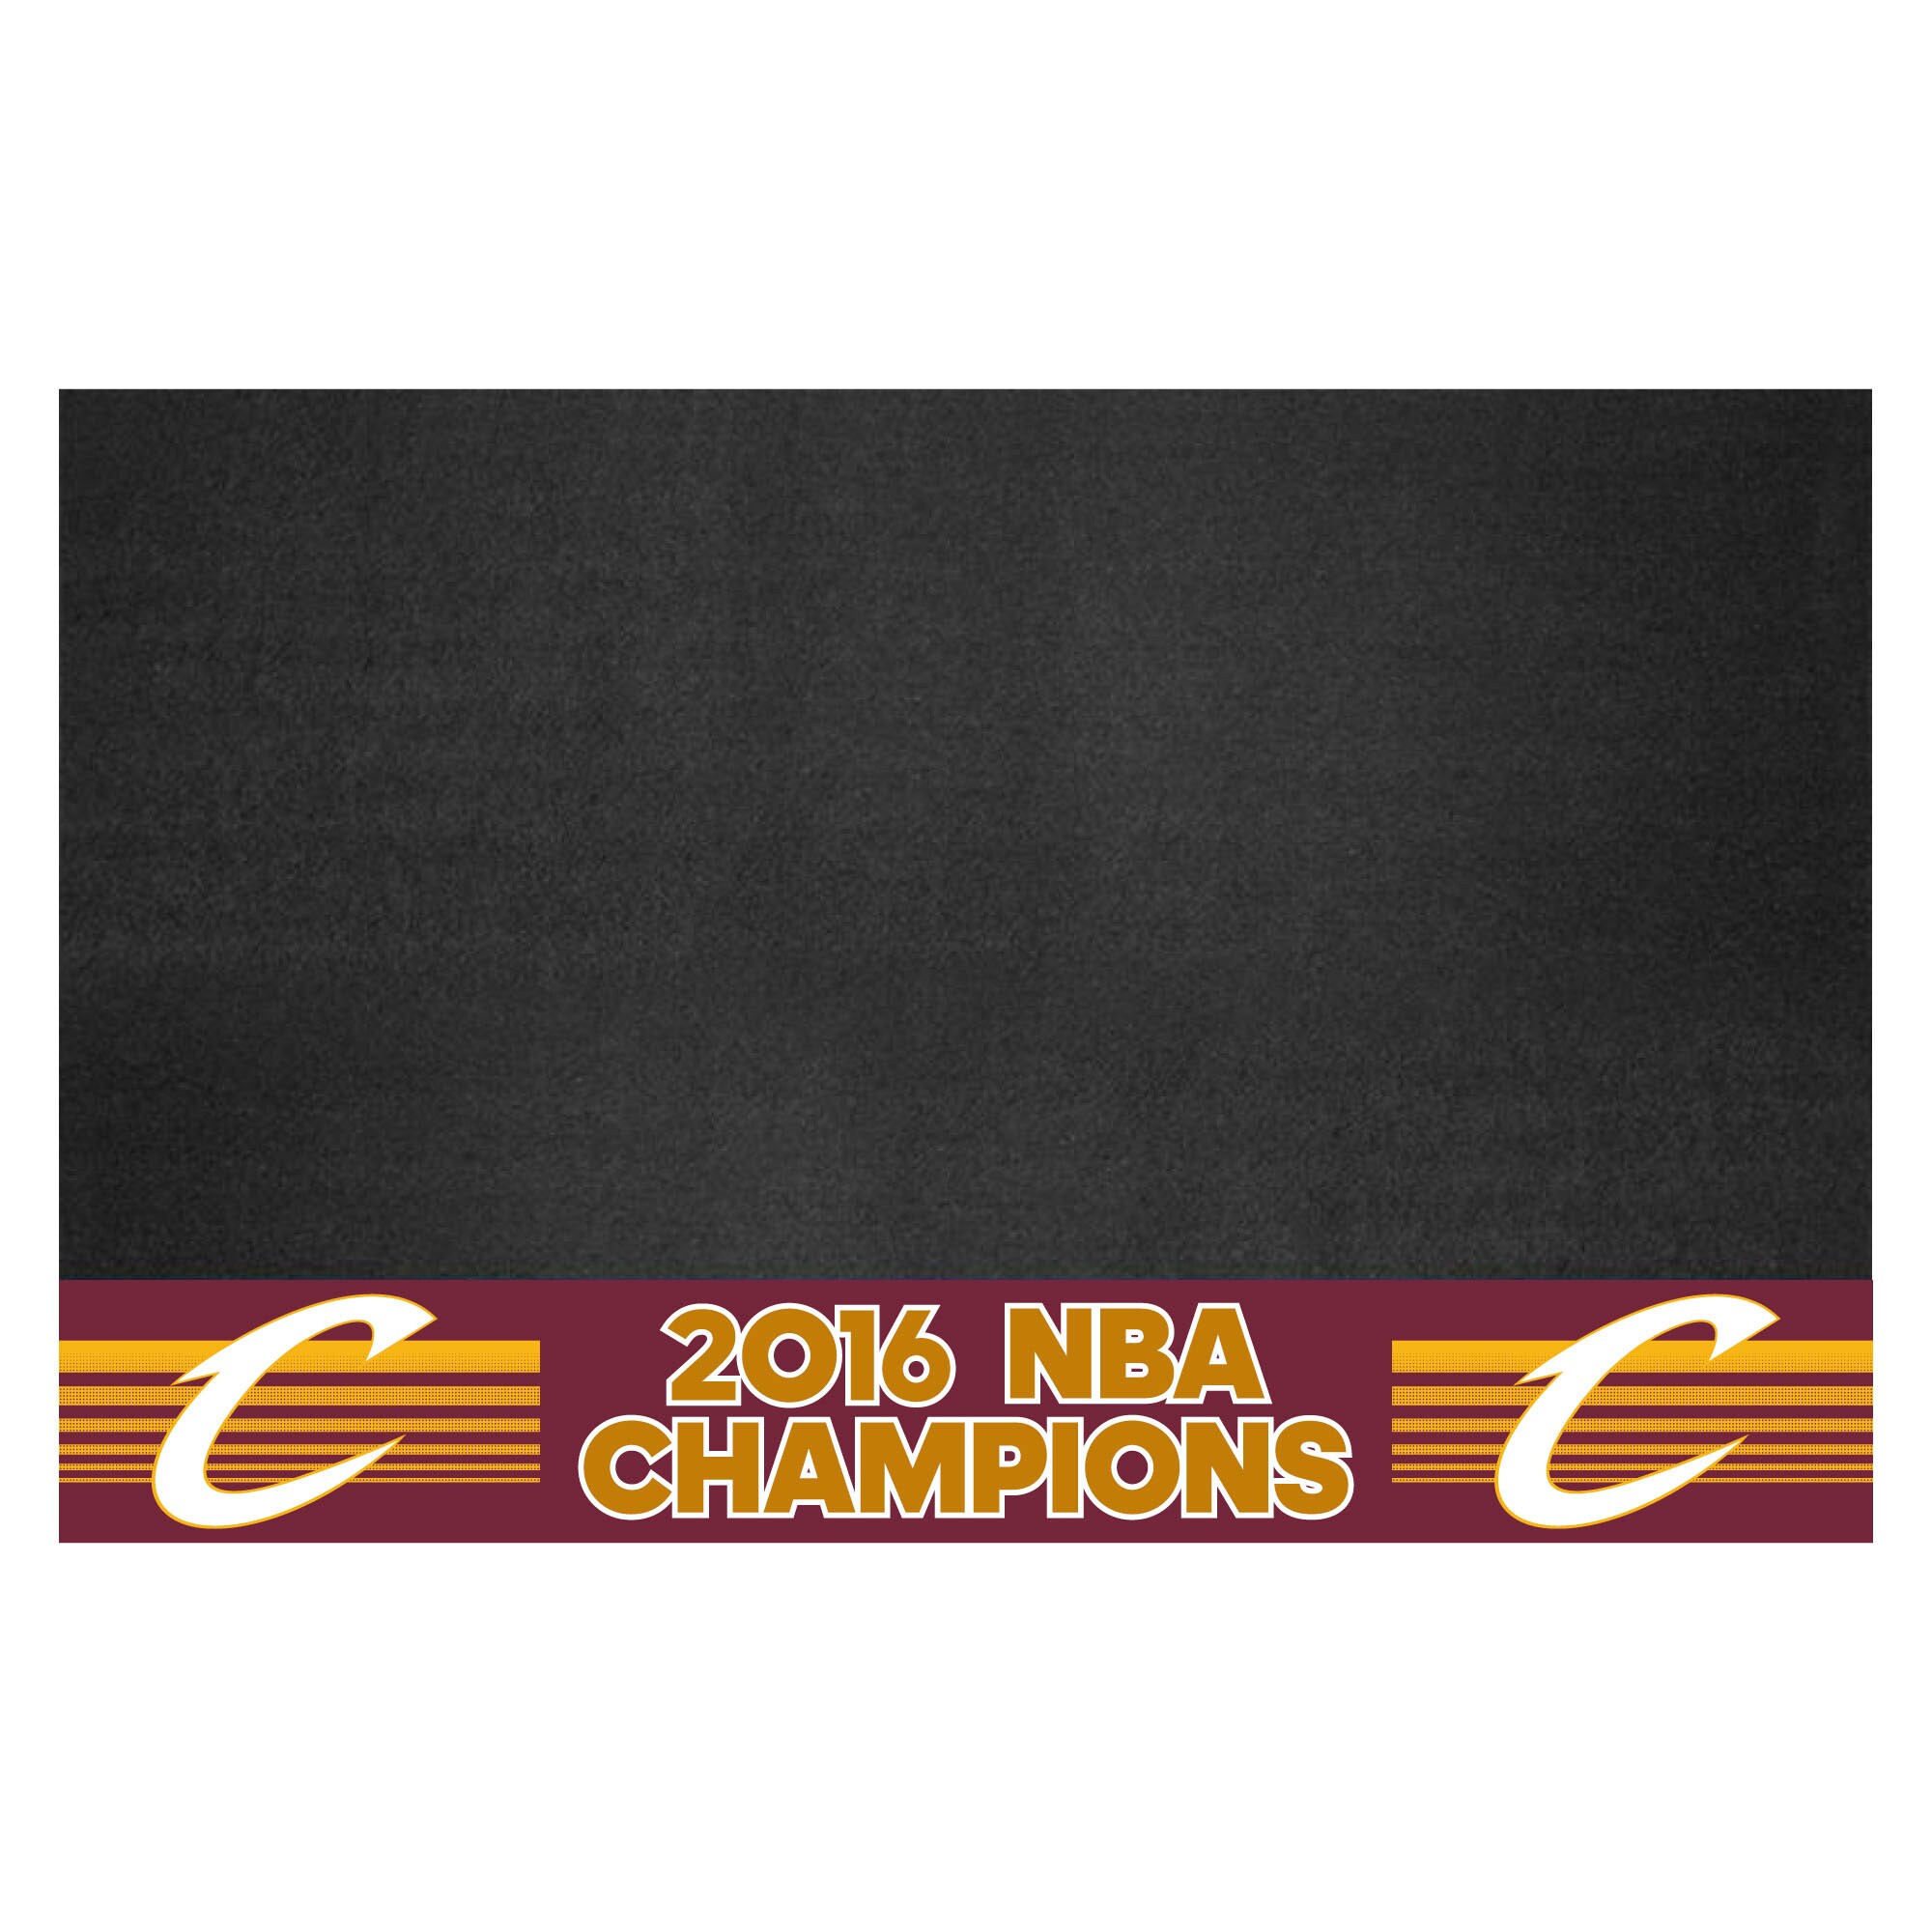 FANMATS NBA Multi-Colored 3 ft. x 3.5 ft. LA Lakers/Celtics House